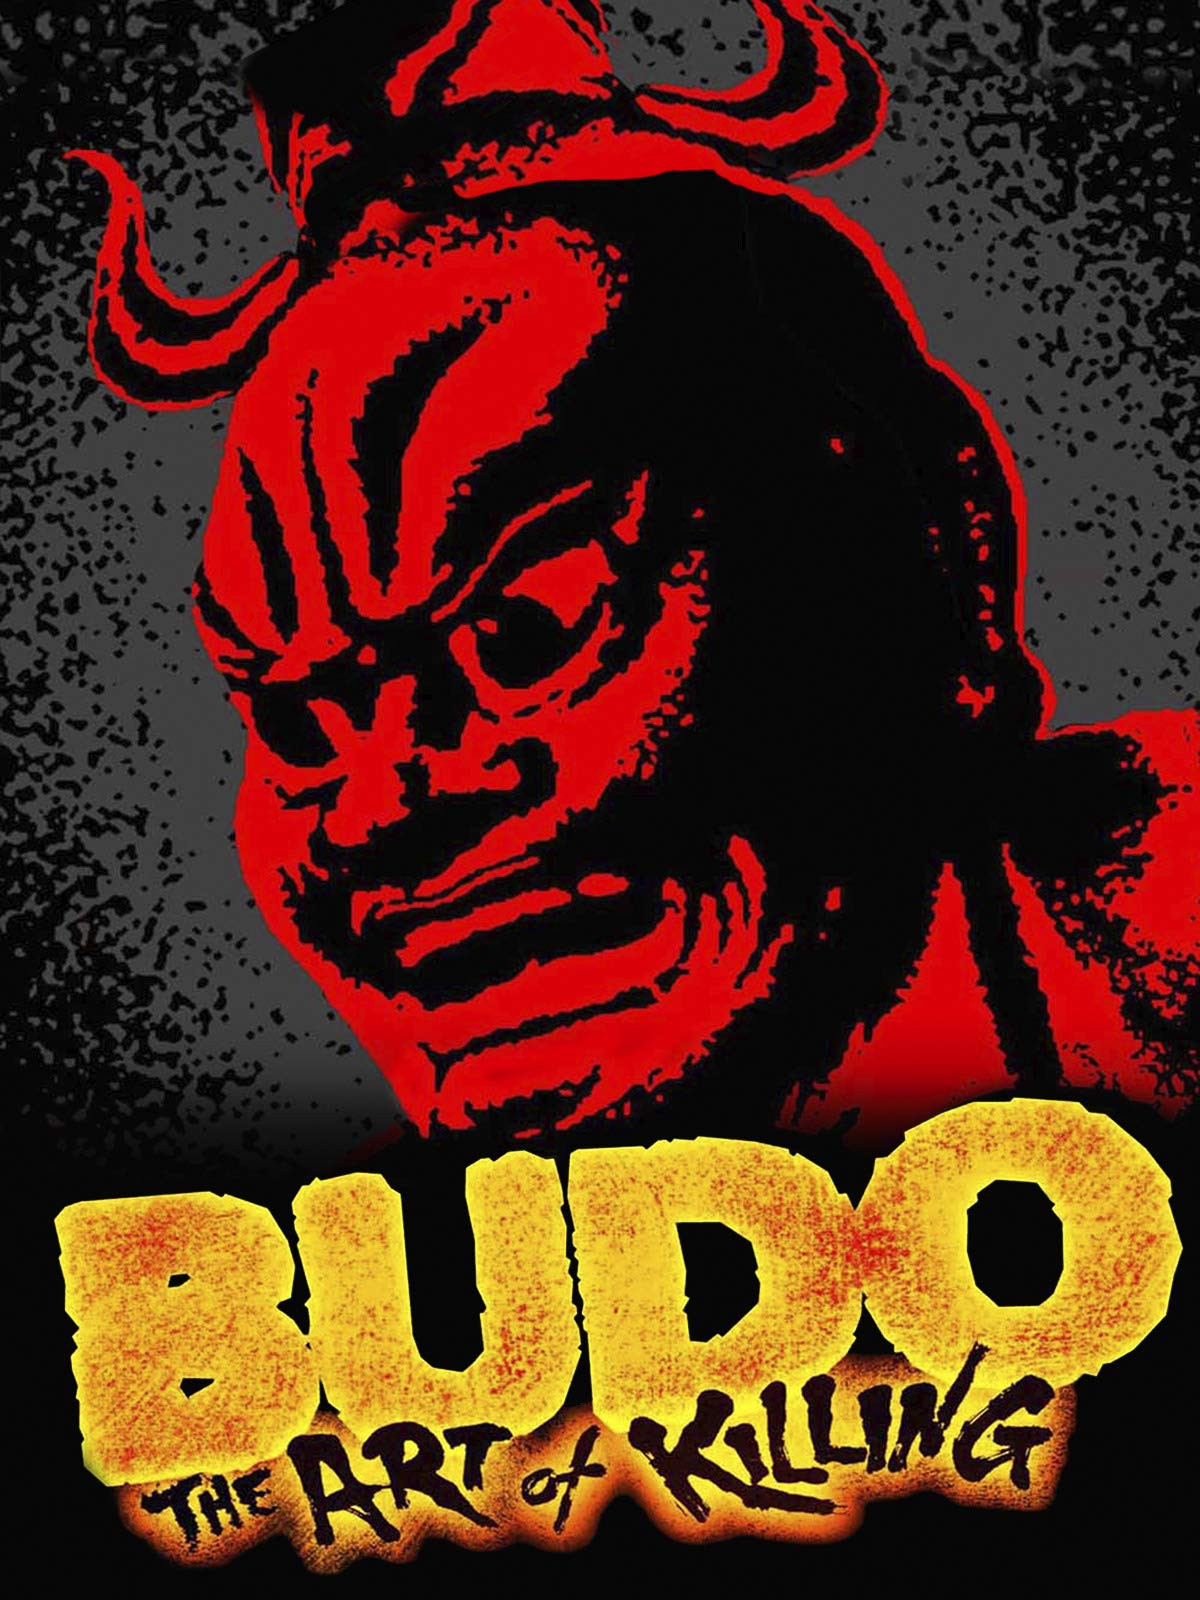 Budo the Art of Killing Documentary DVD (Preowned) - Budovideos